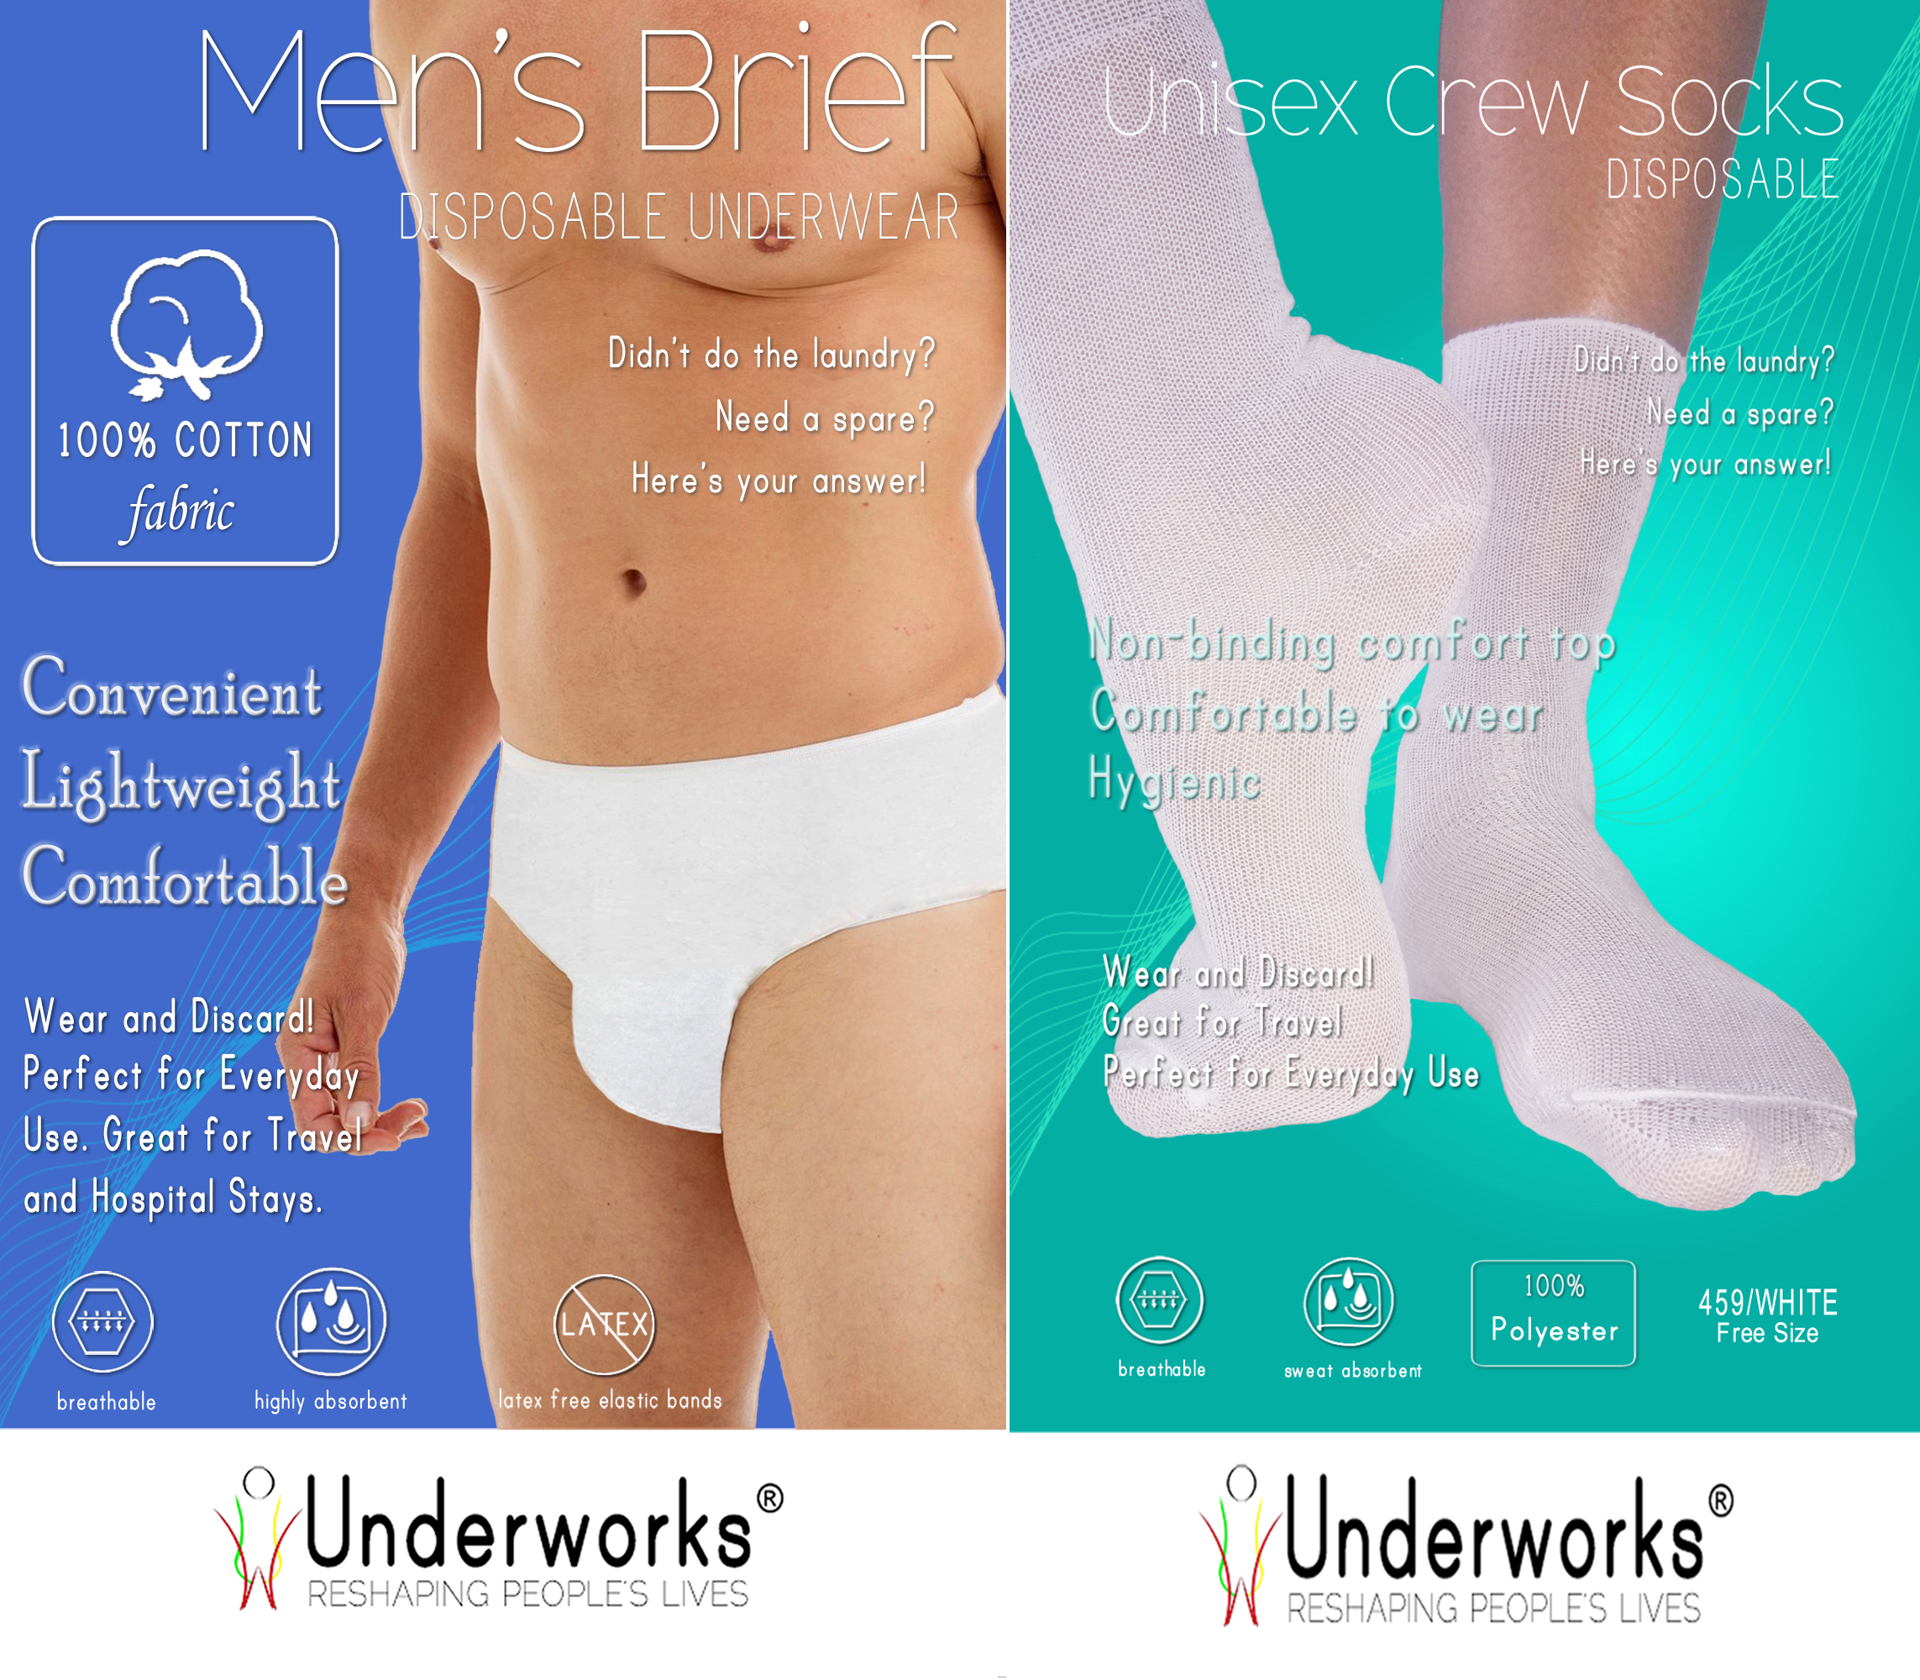 Underworks Underworks Combo - Men's Briefs and Crew Socks -10-Pack of Men's  Disposable 100% Cotton Underwear and 10-Pack of Disposable Crew Socks 